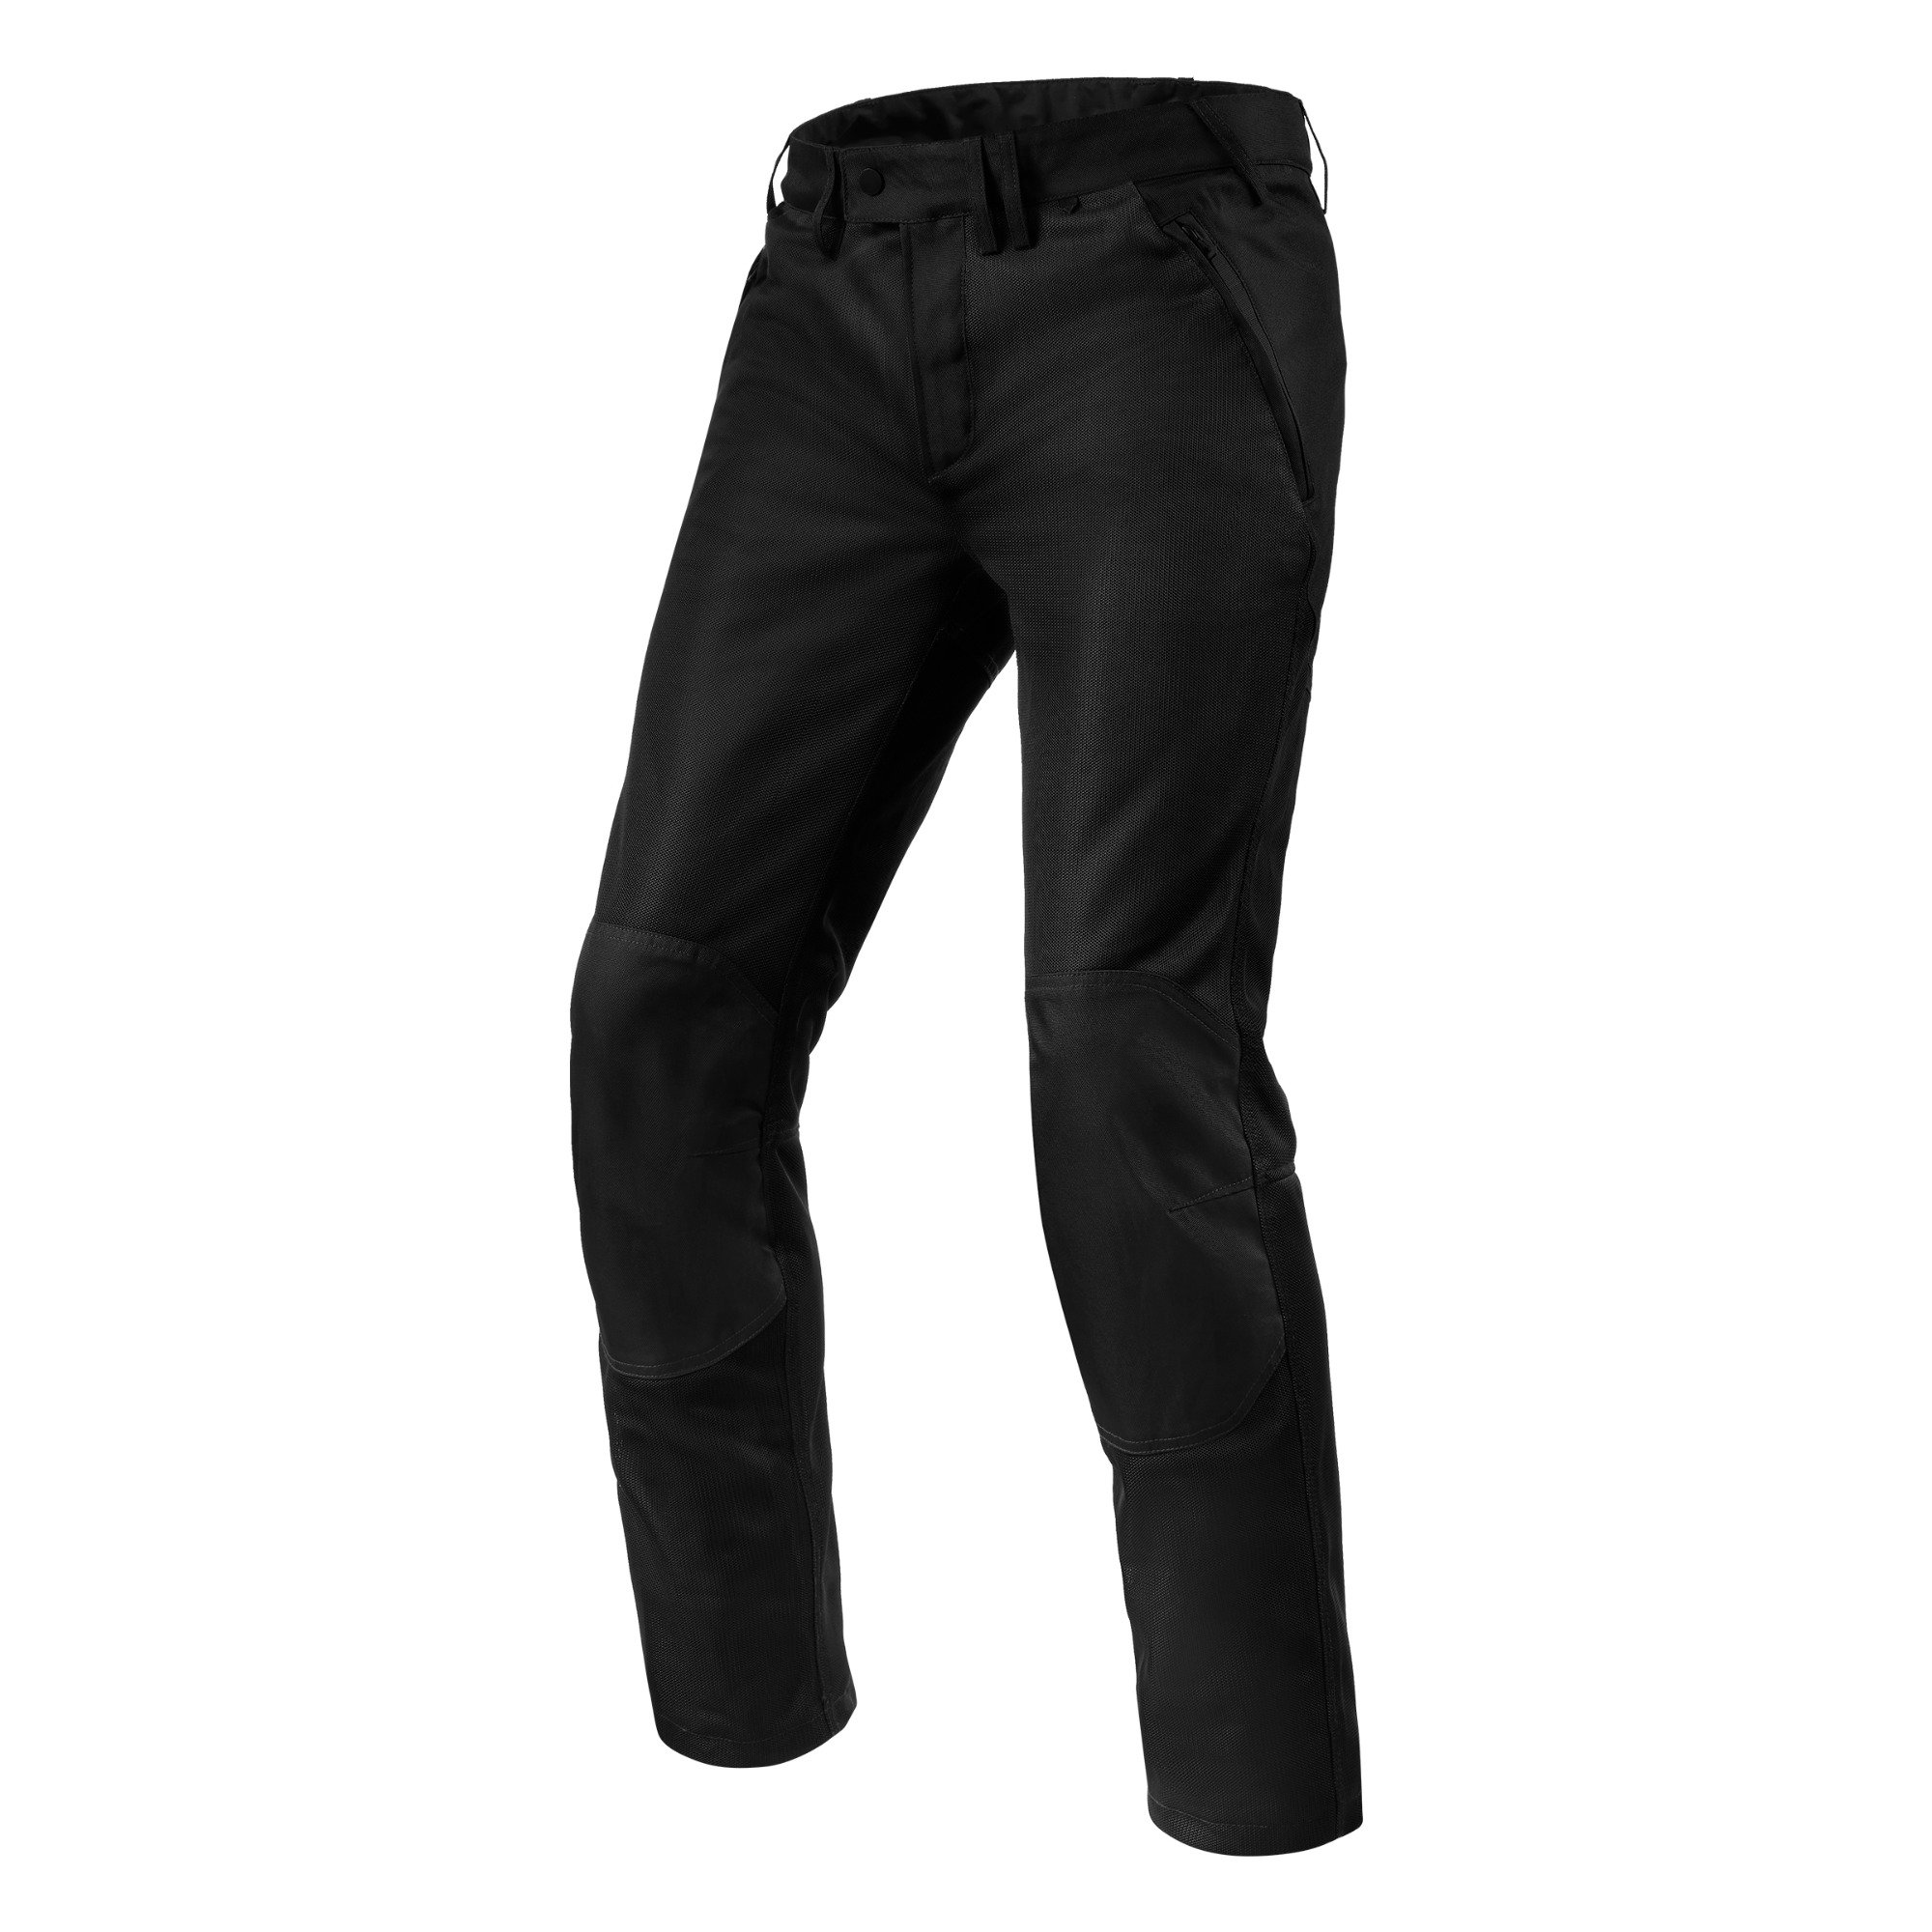 Image of REV'IT! Pants Eclipse 2 Black Long Motorcycle Pants Size 3XL ID 8700001368698